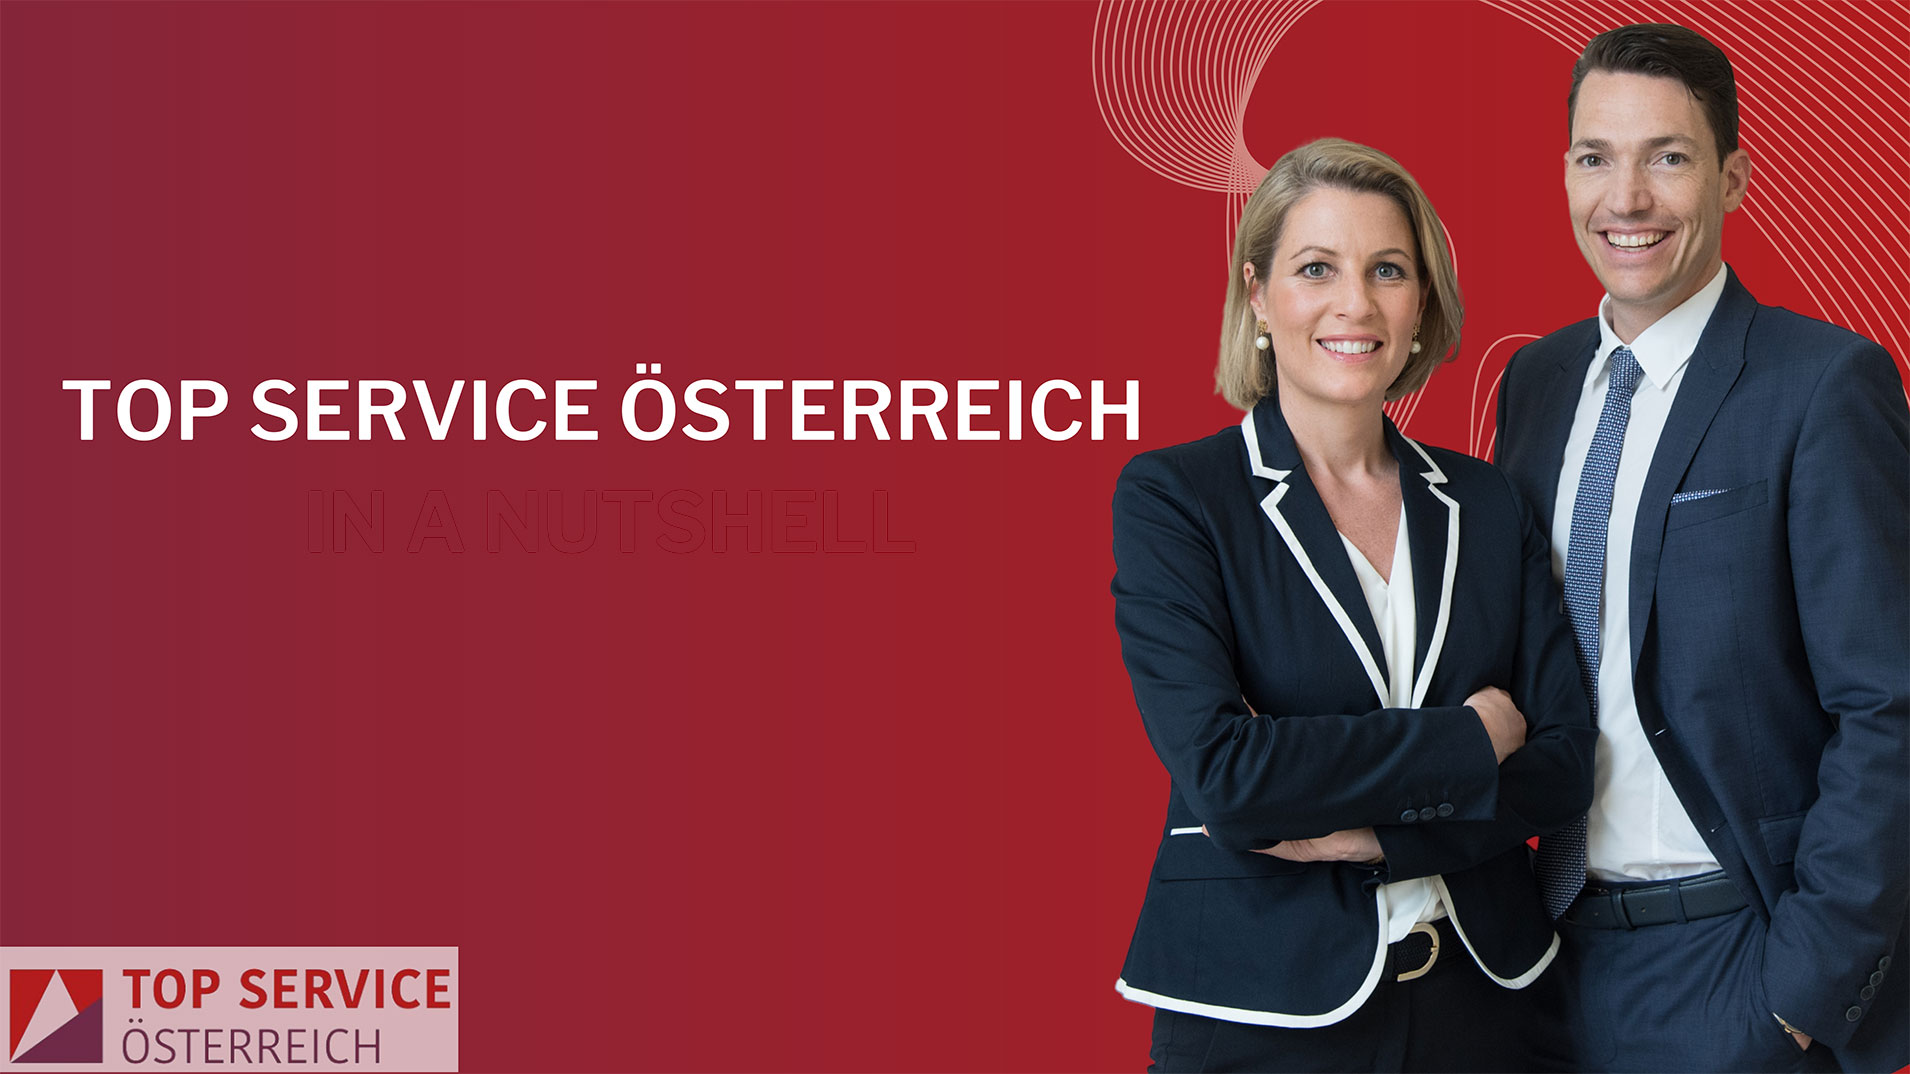 (c) Top-service-oesterreich.at